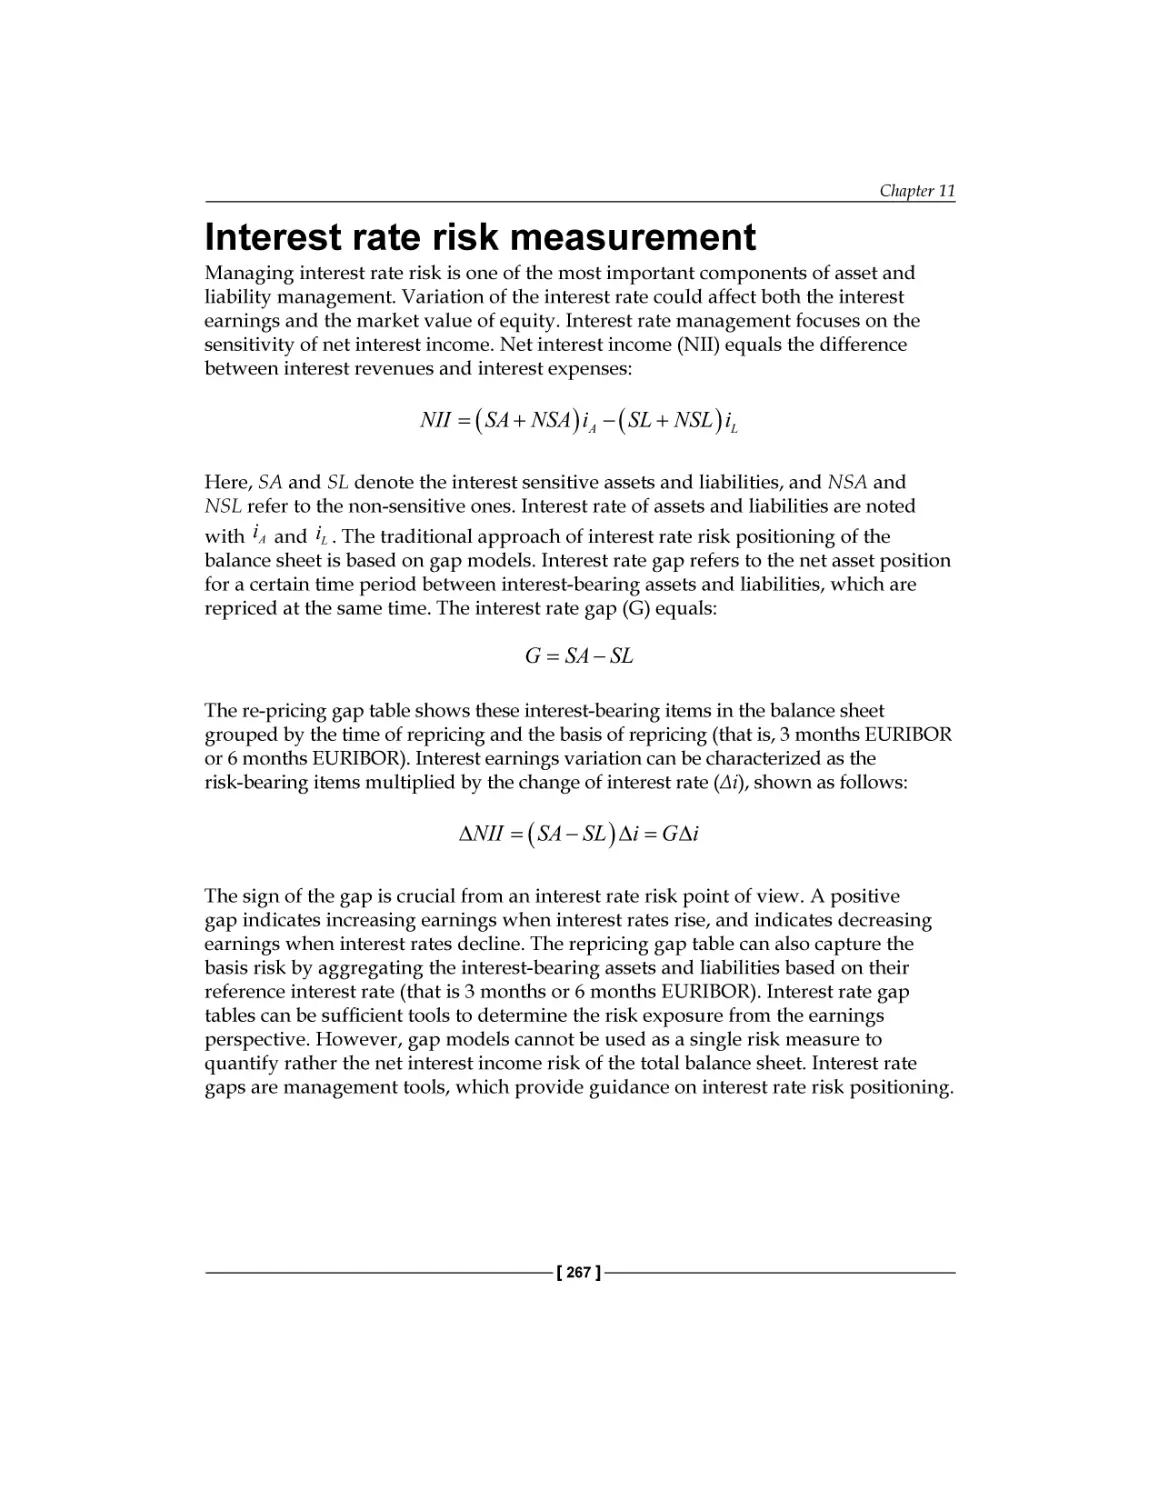 Interest rate risk measurement